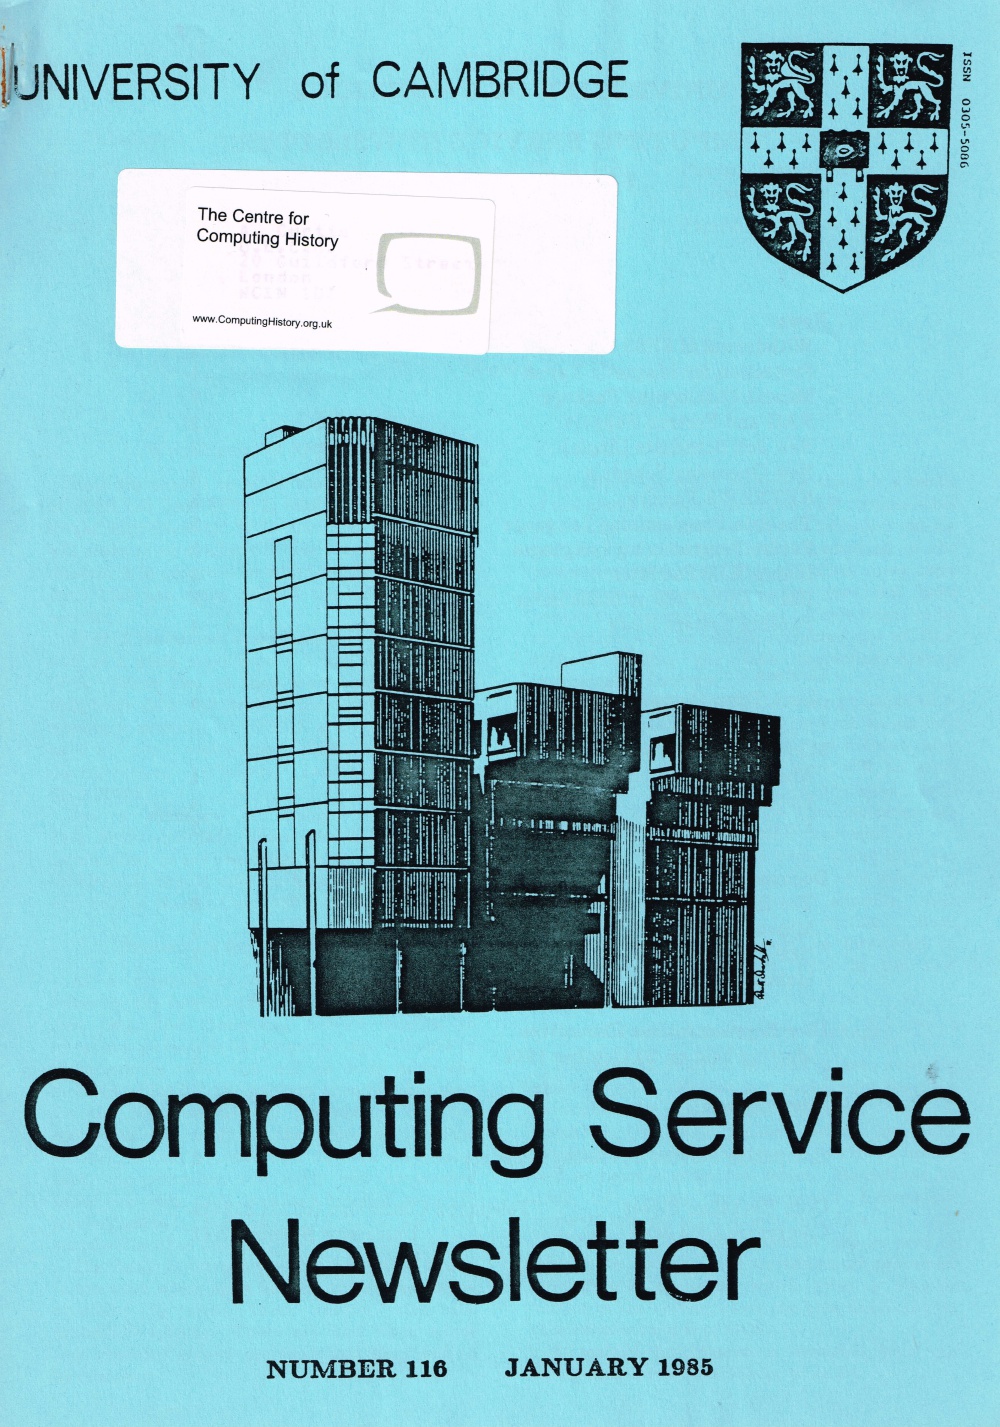 Article: University of Cambridge Computing Service January 1985 Newsletter 116